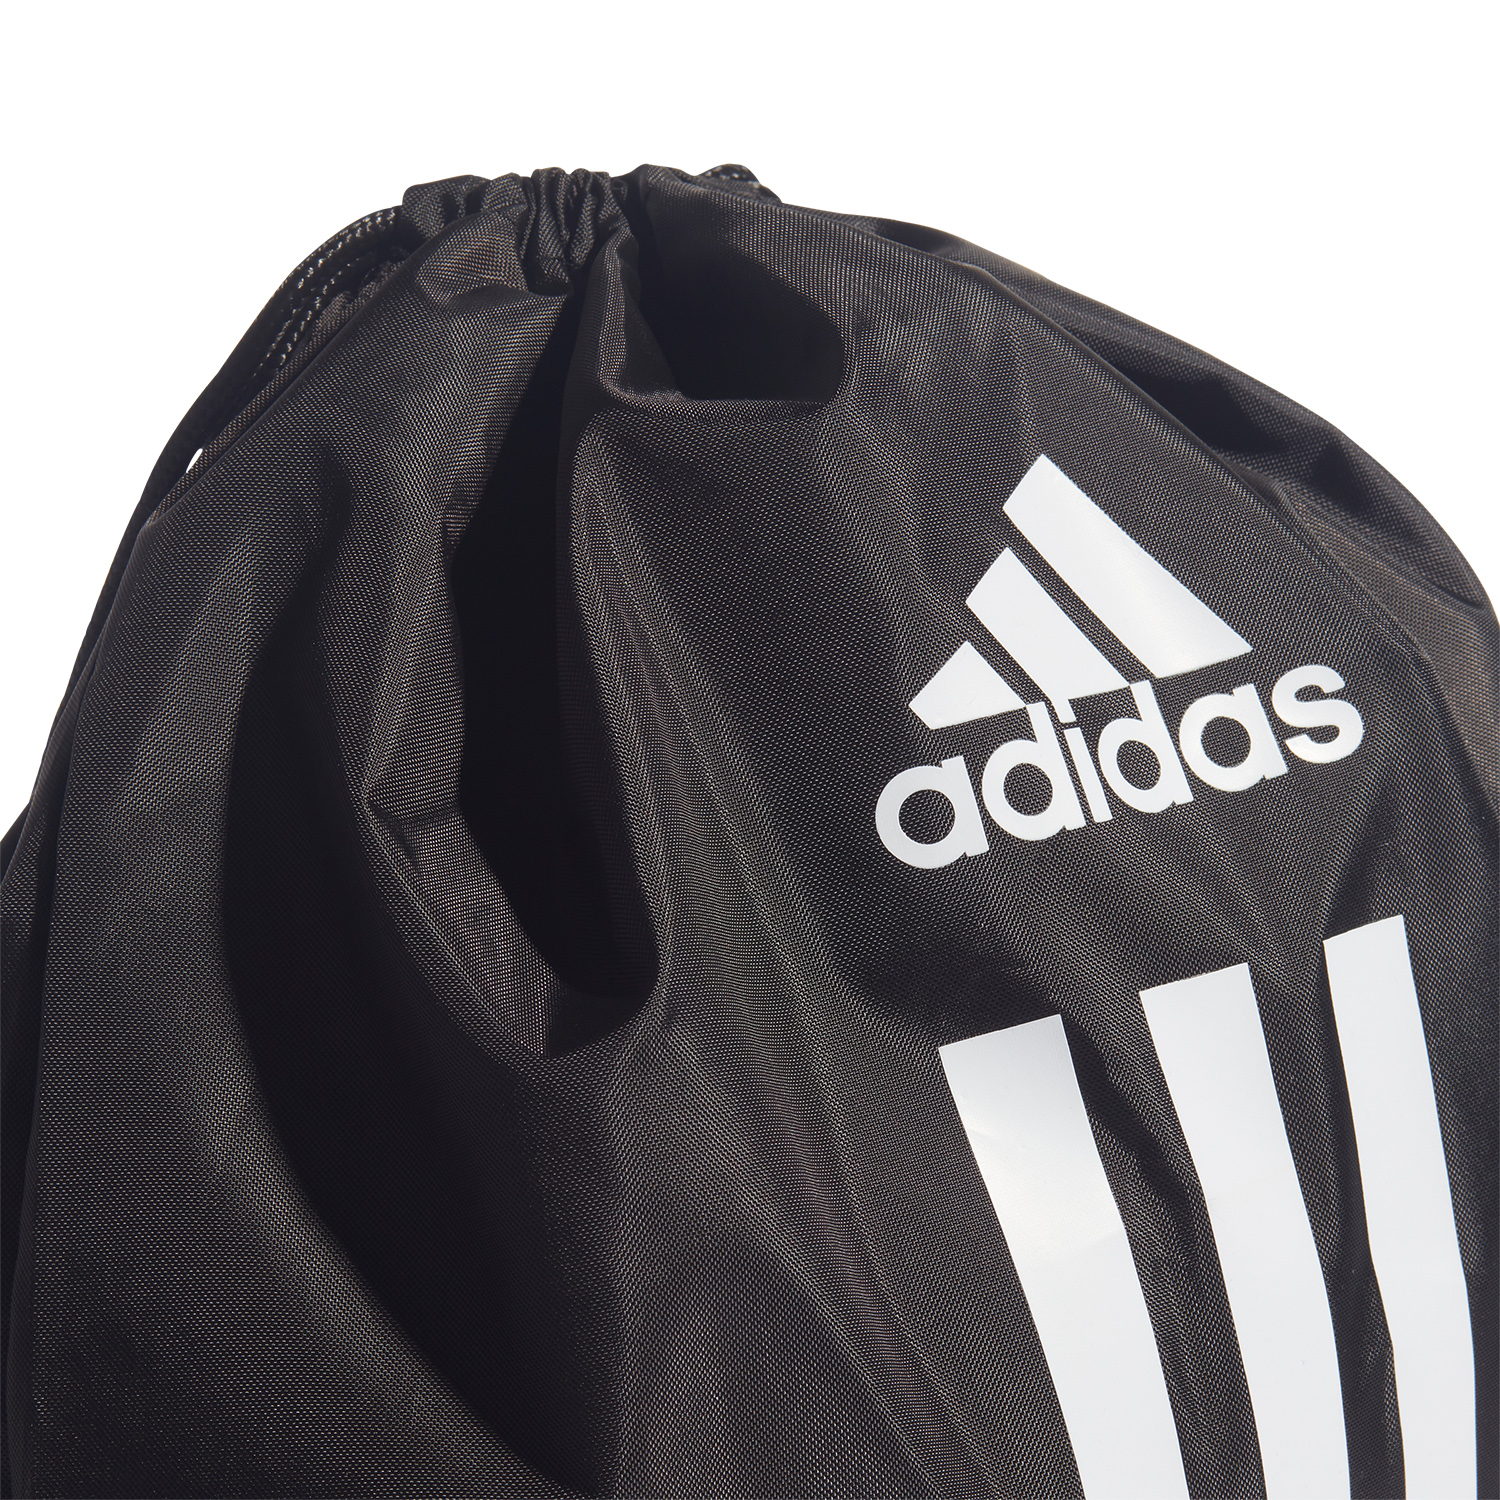 adidas Power Sportswear Sackpack - Black/White